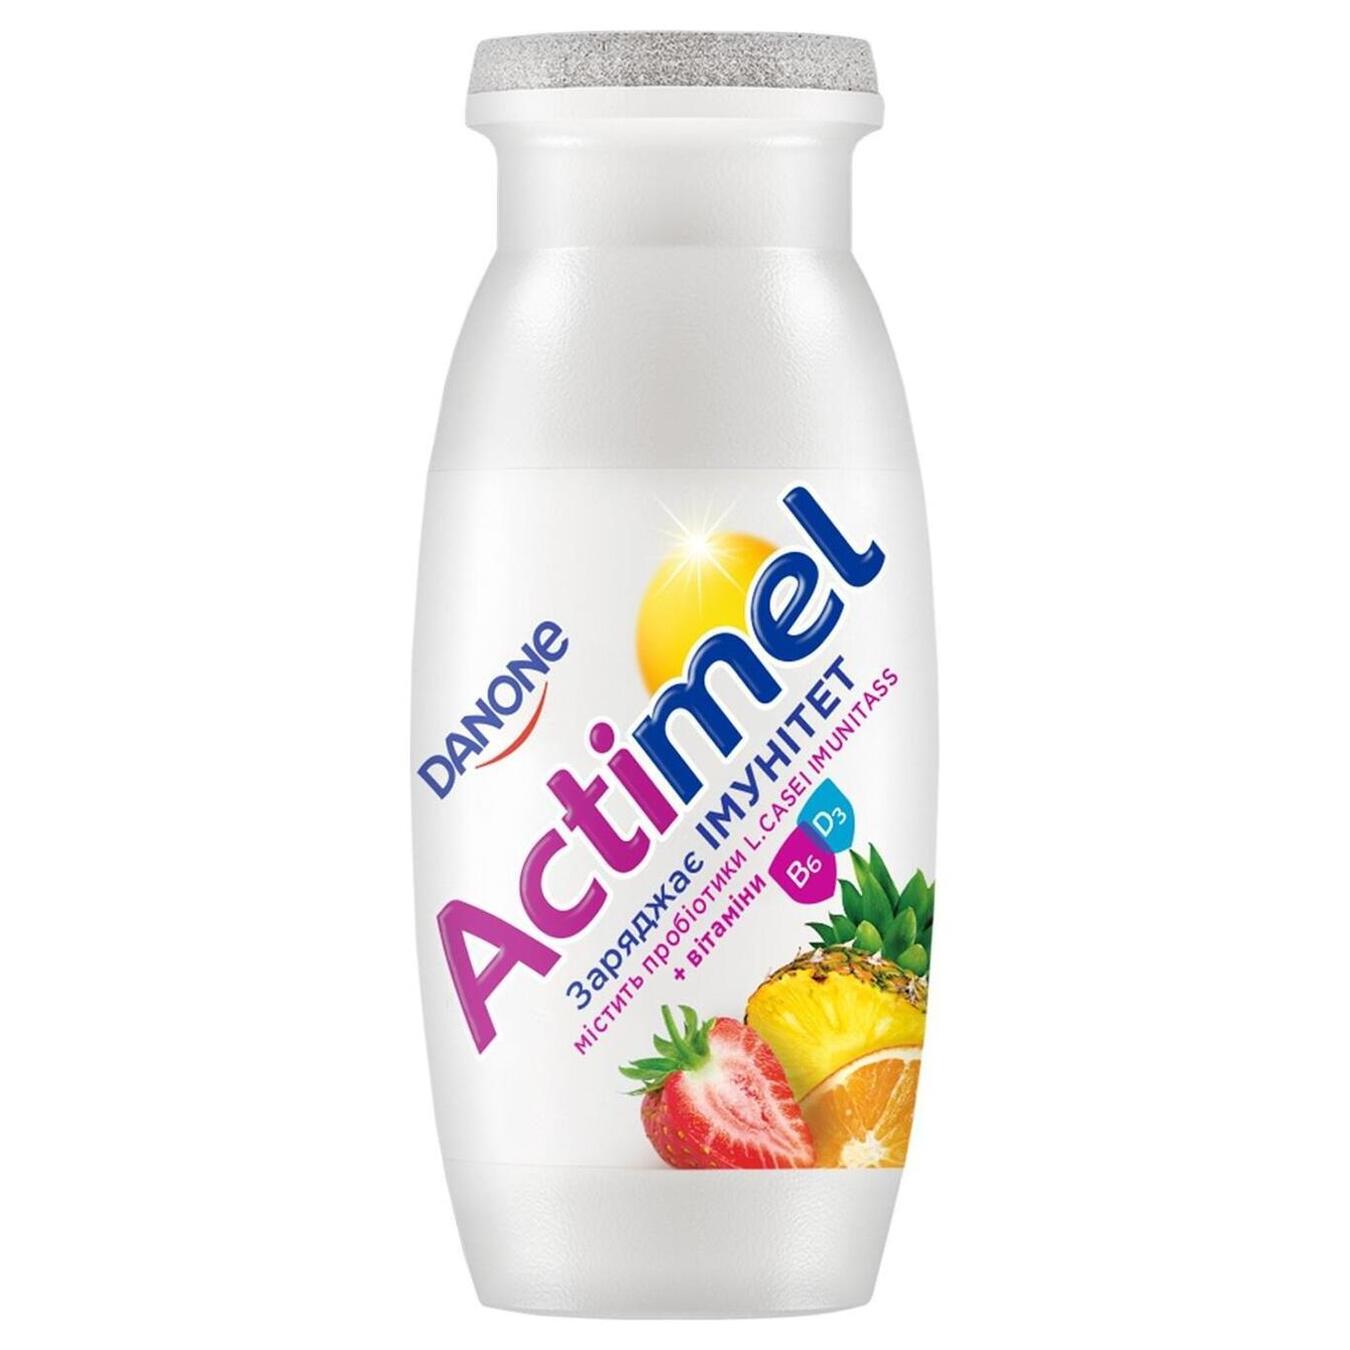 Actimel multifruit fermented milk product 1.4% 100g